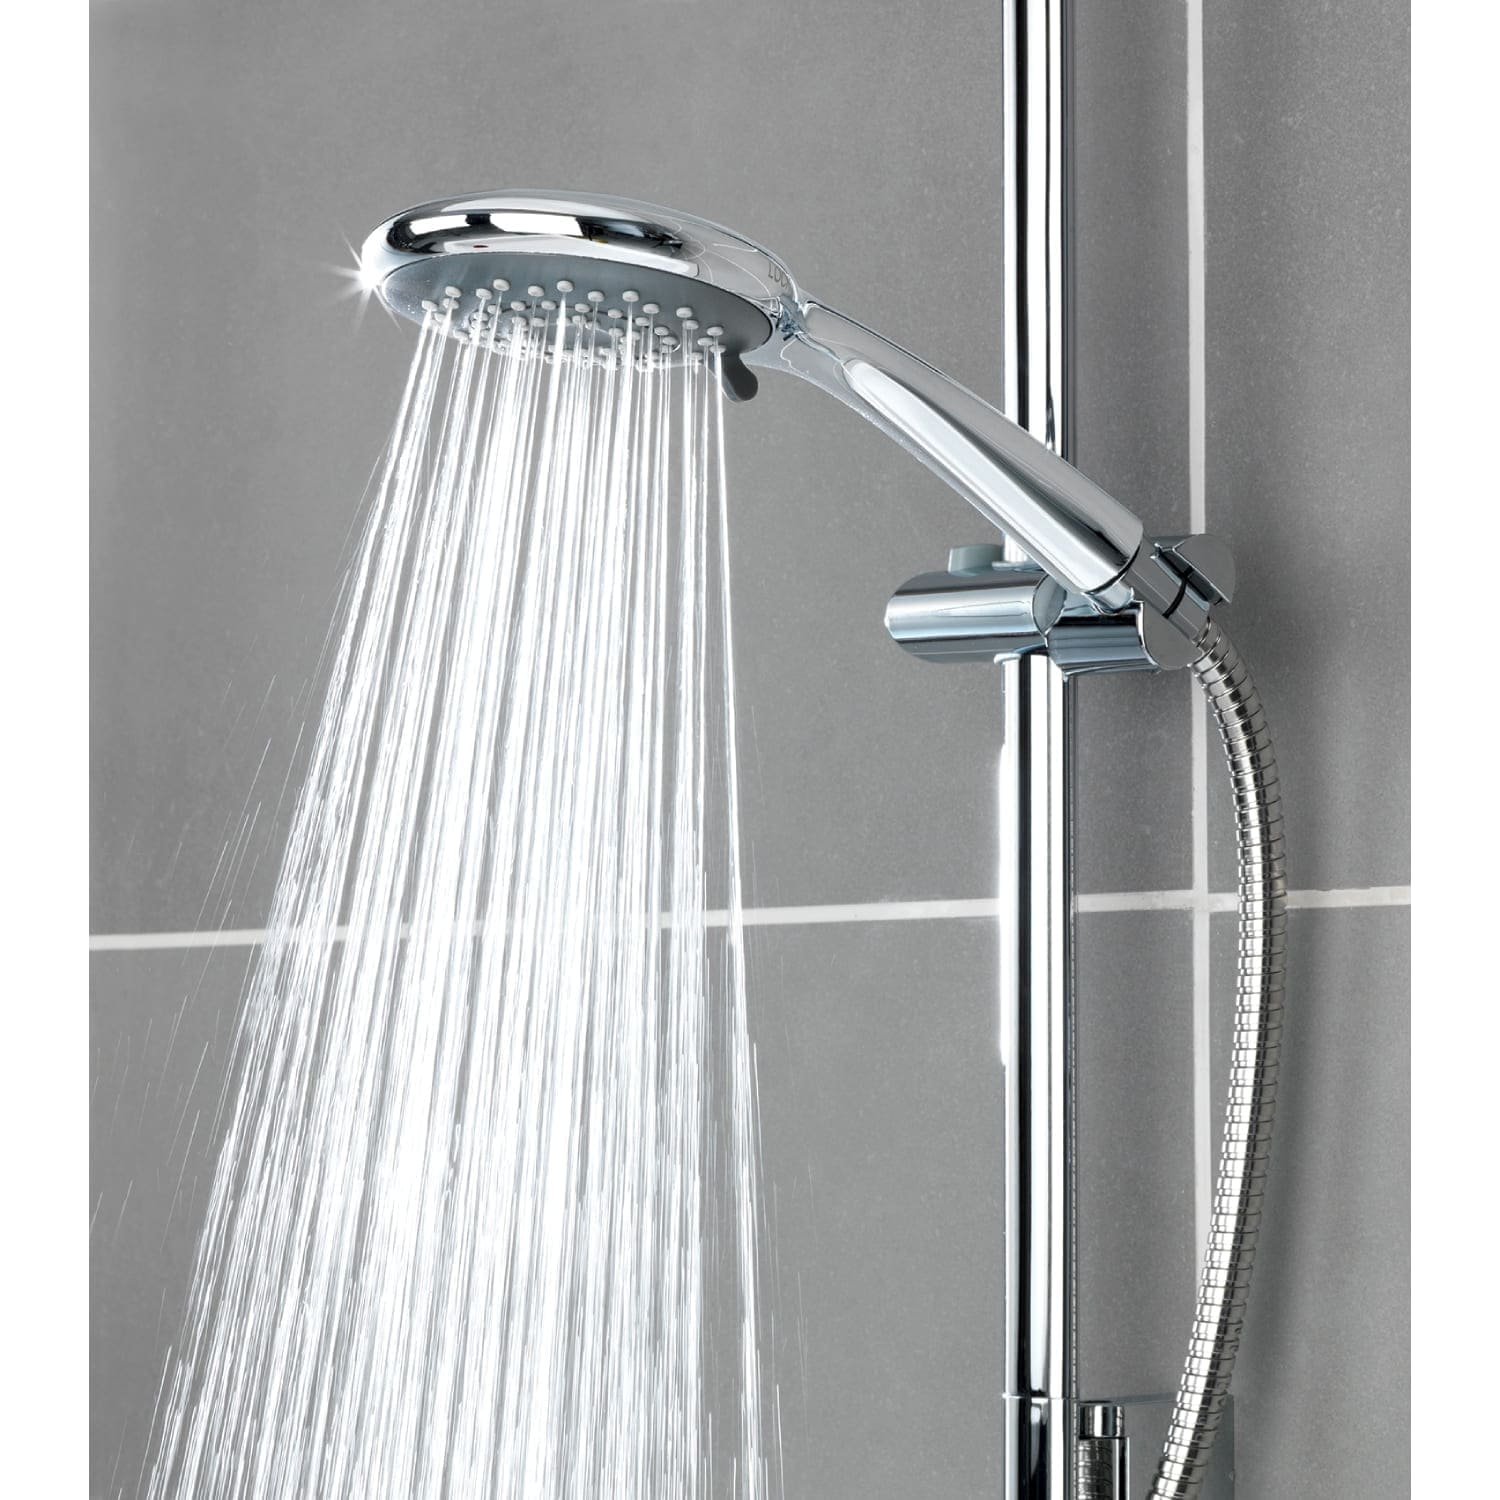 3in1 water-saving shower, shower head Ø 110mm - saves energy